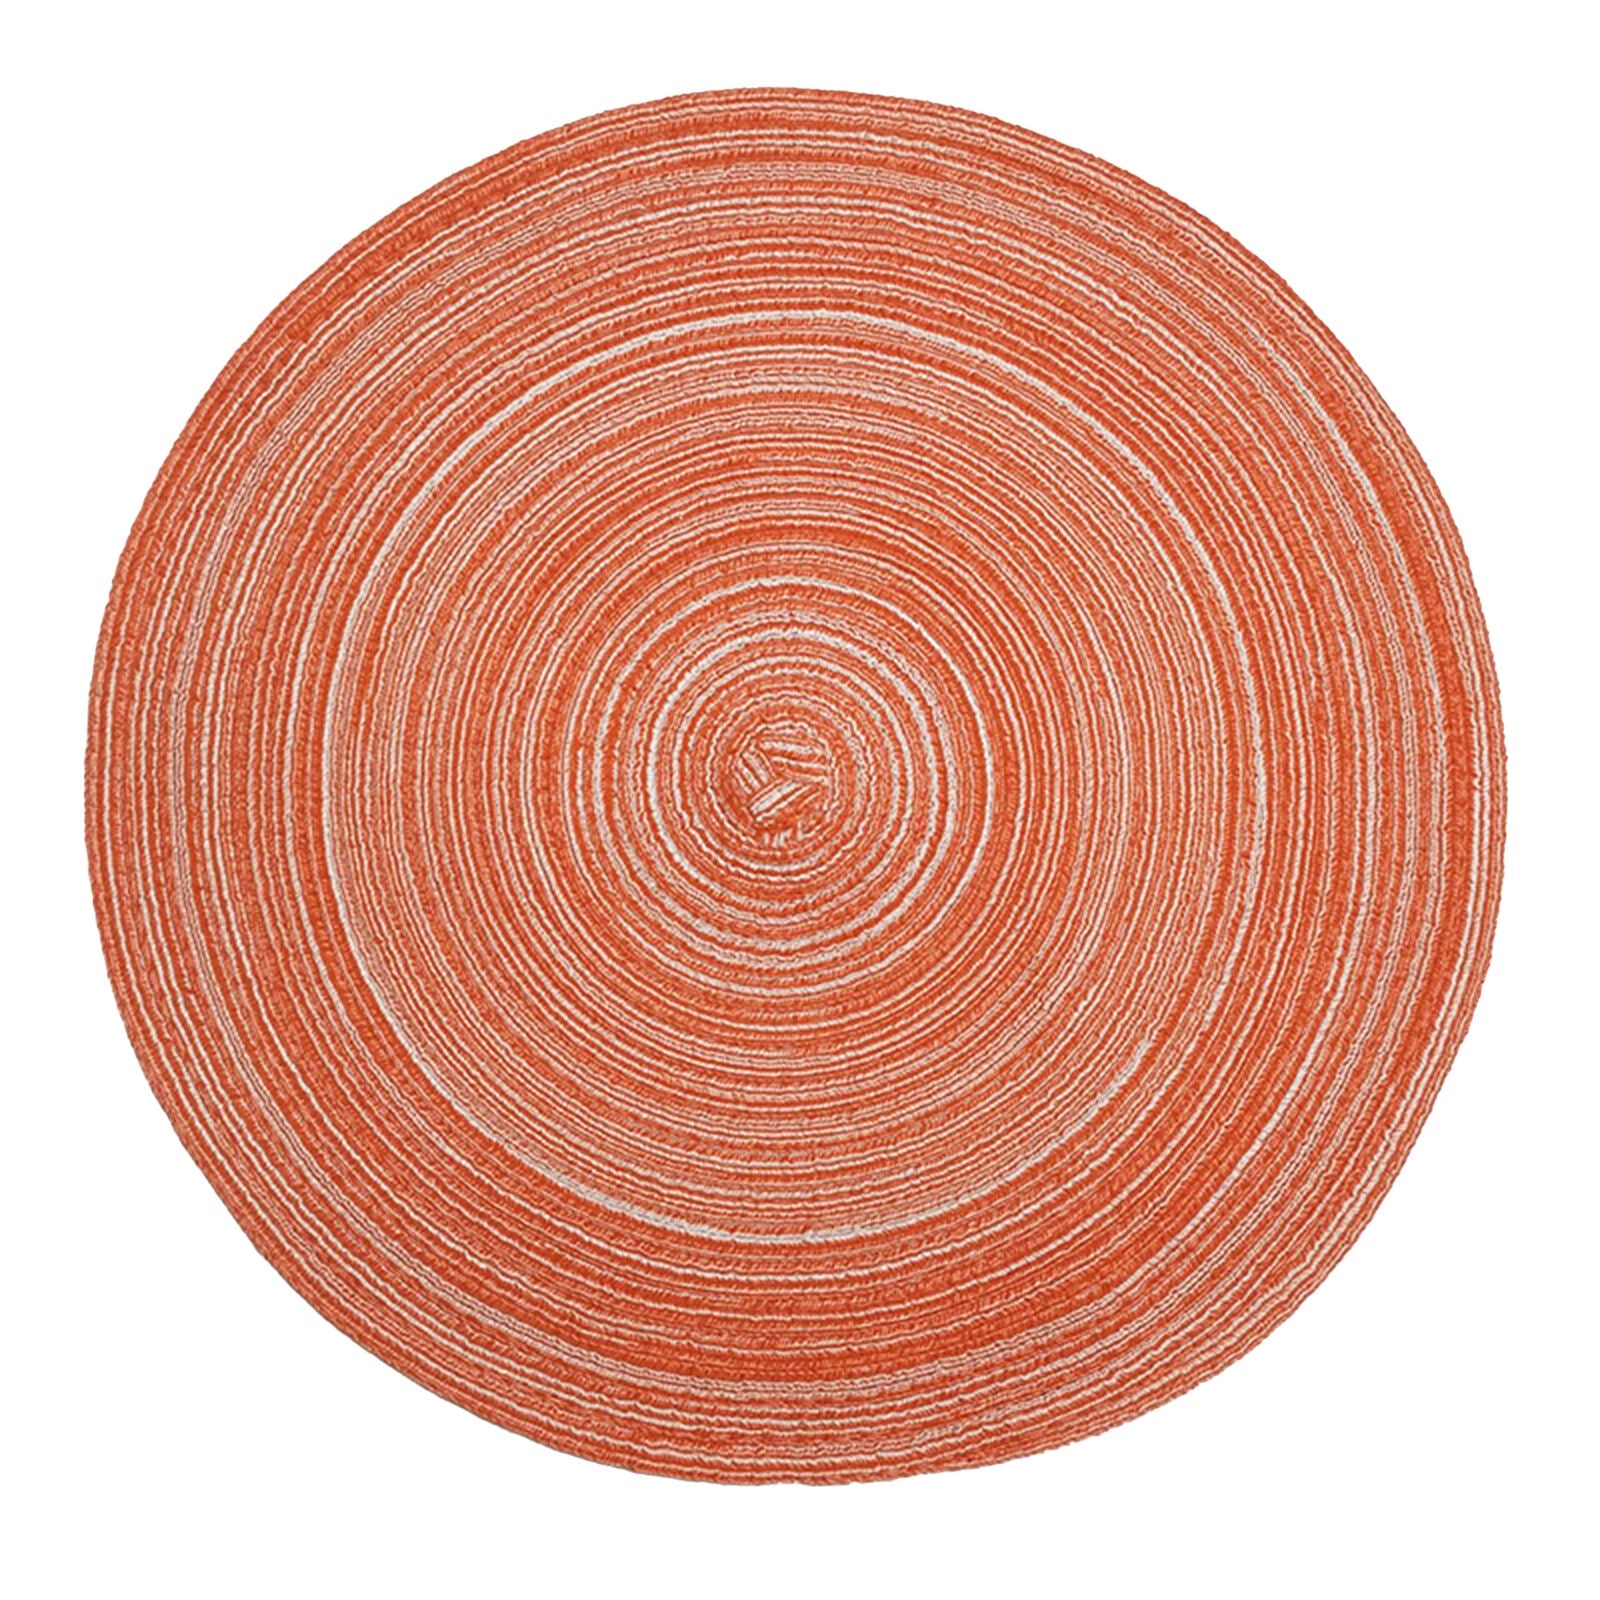 Orange 4PCS 30CM Round Jacquard-Weaved Non Slip Placemats Dining Table Place Mats Set